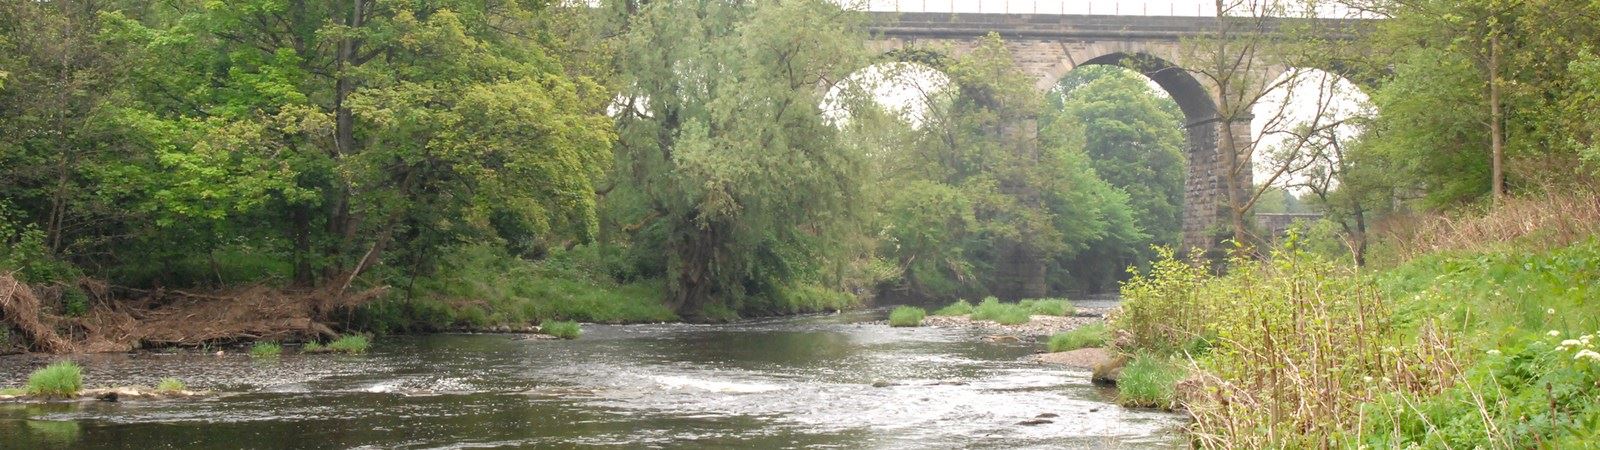 Larbert Viaduct, River Carron